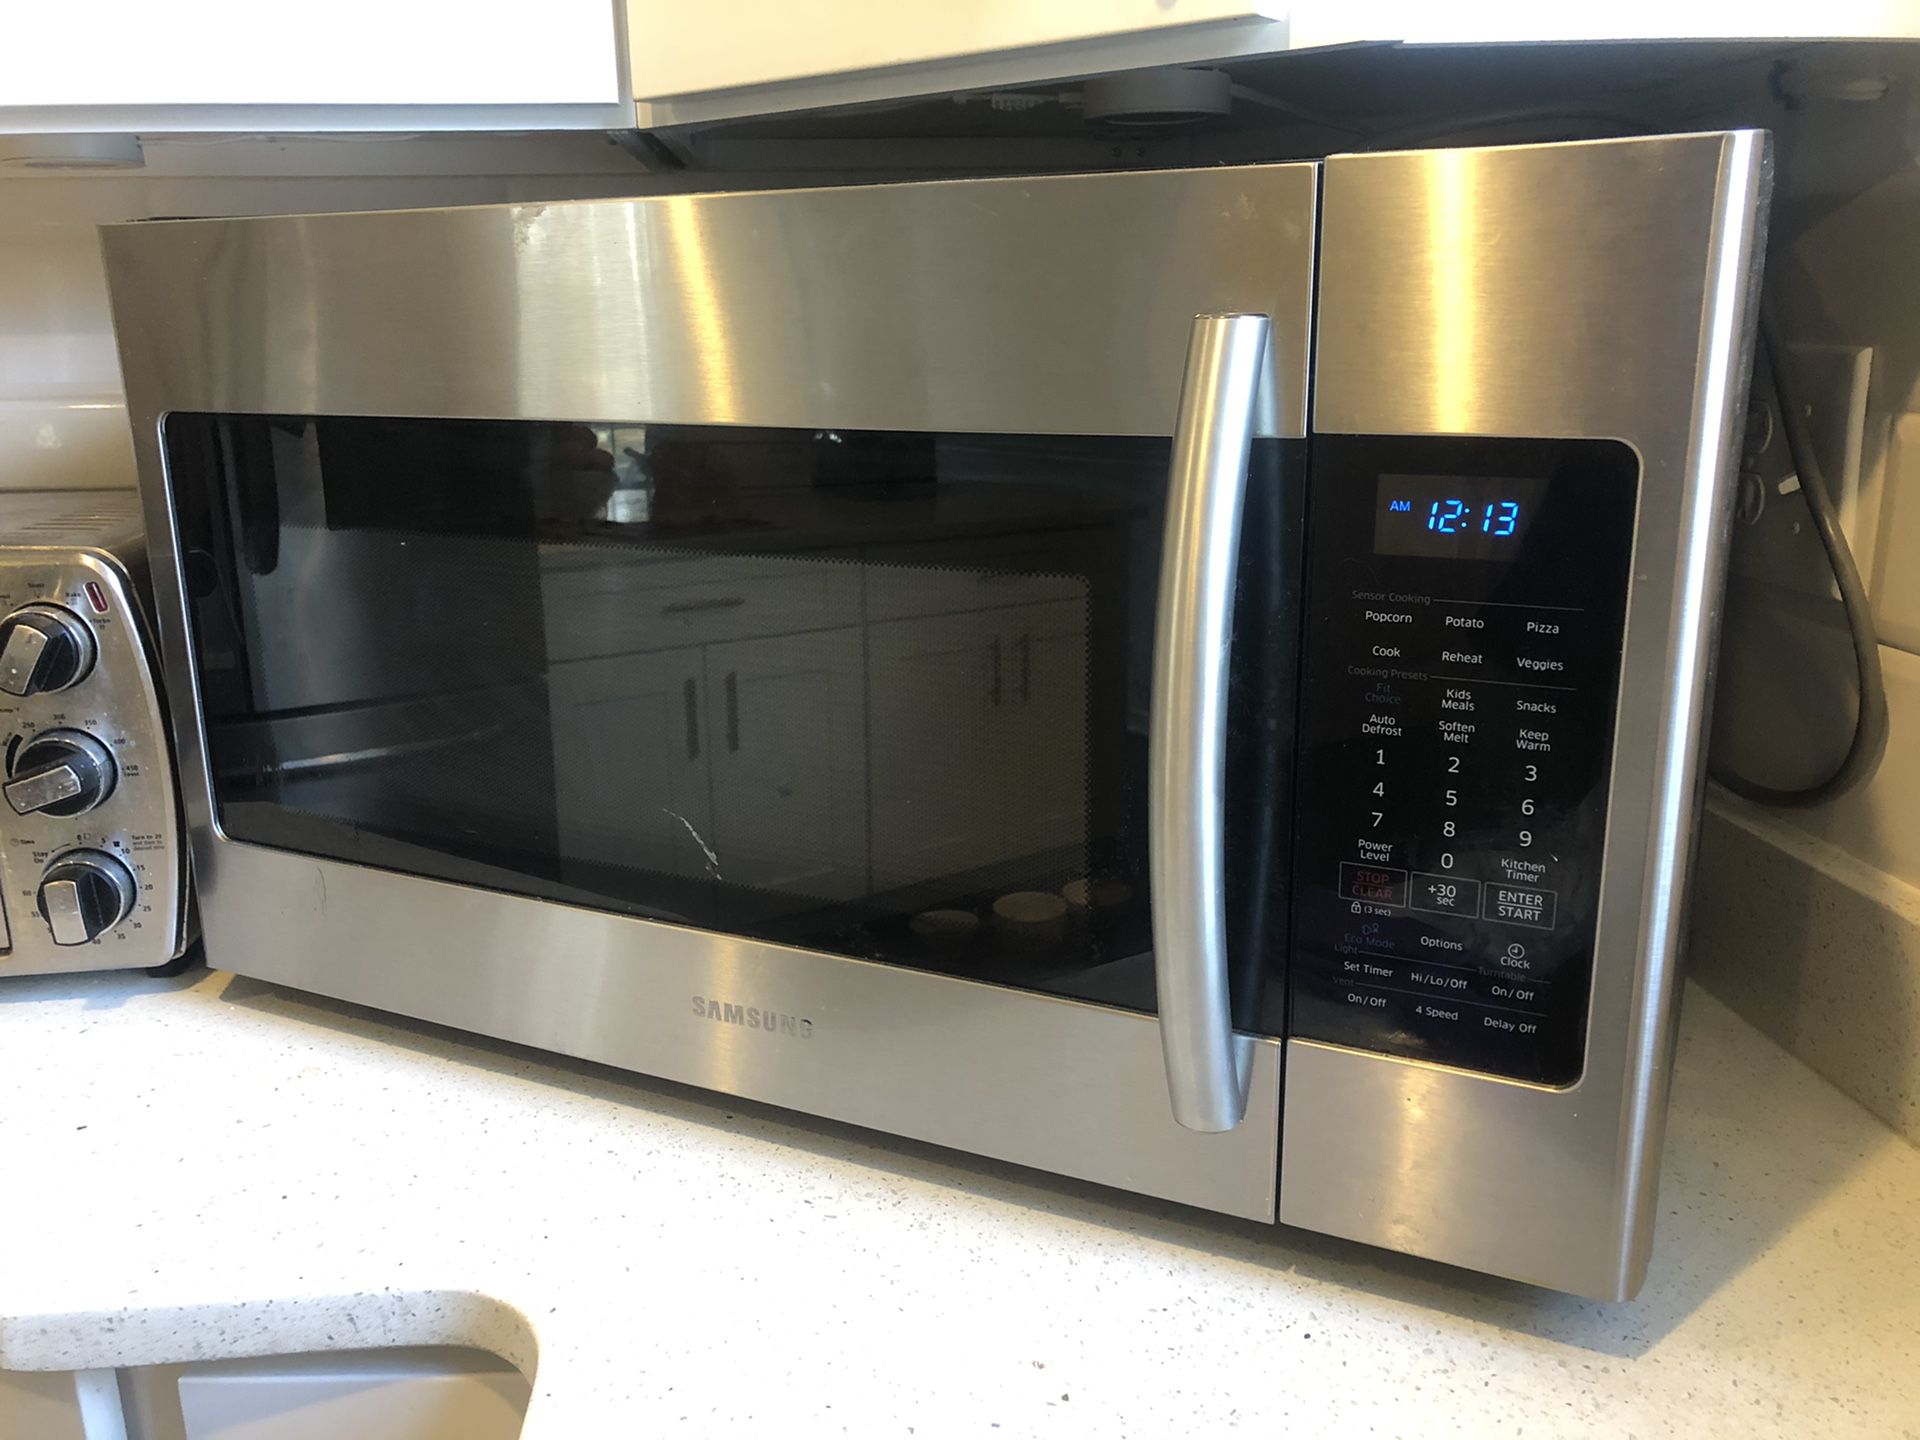 Samsung large microwave like new $140